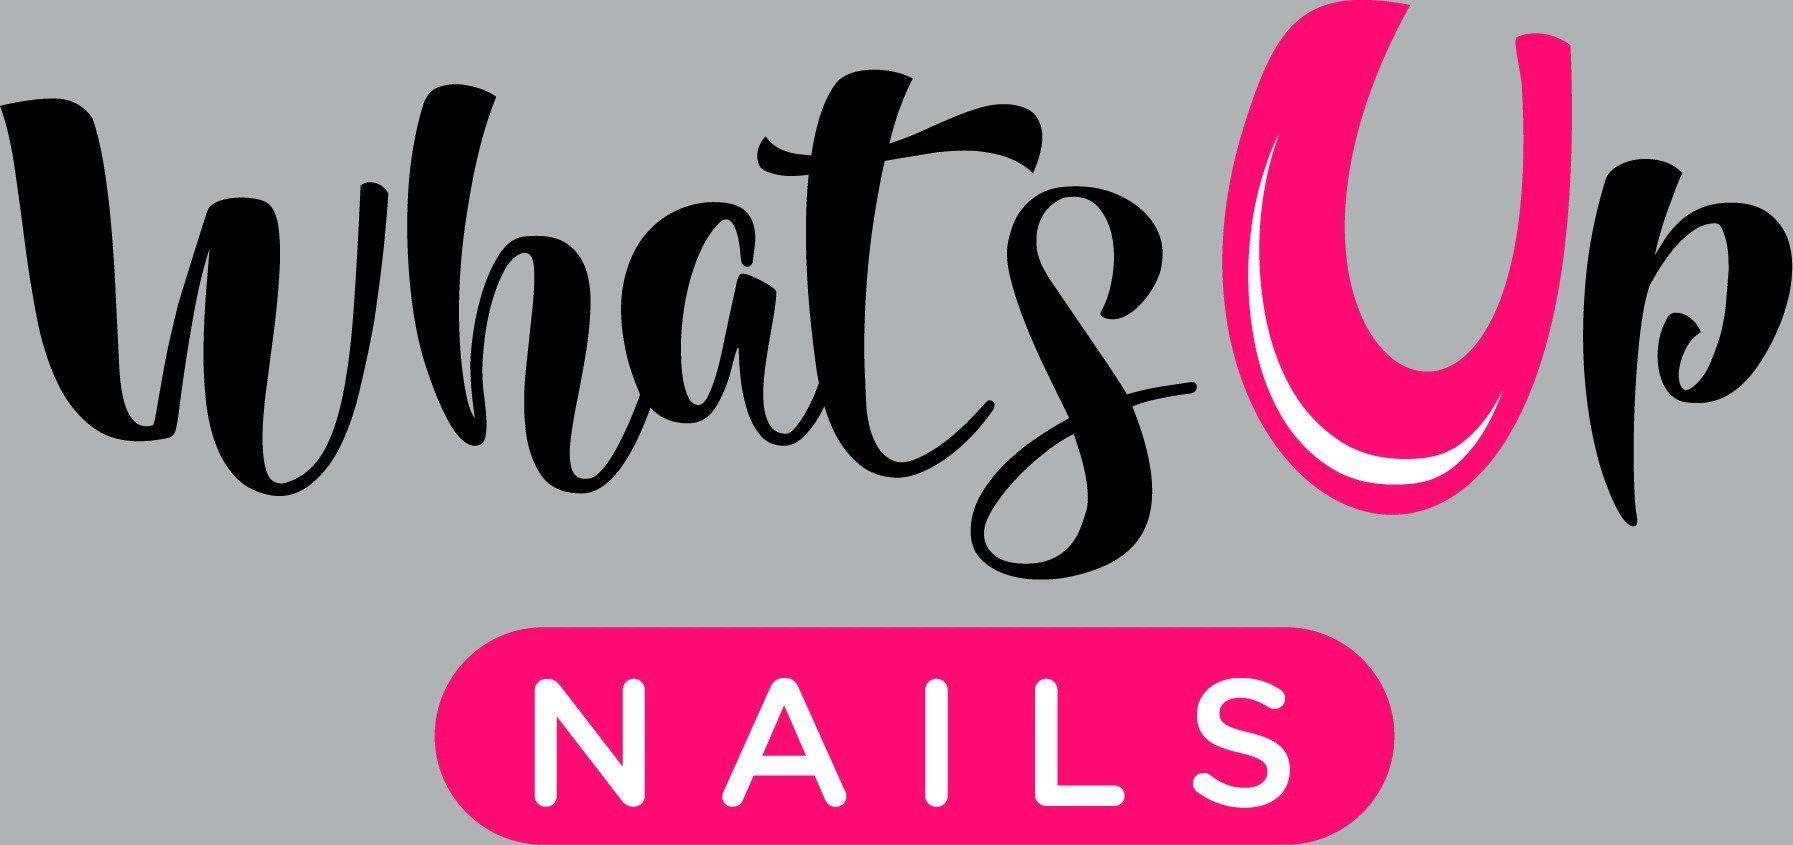 Wholesale Logo - Whats Up Nails Wholesale